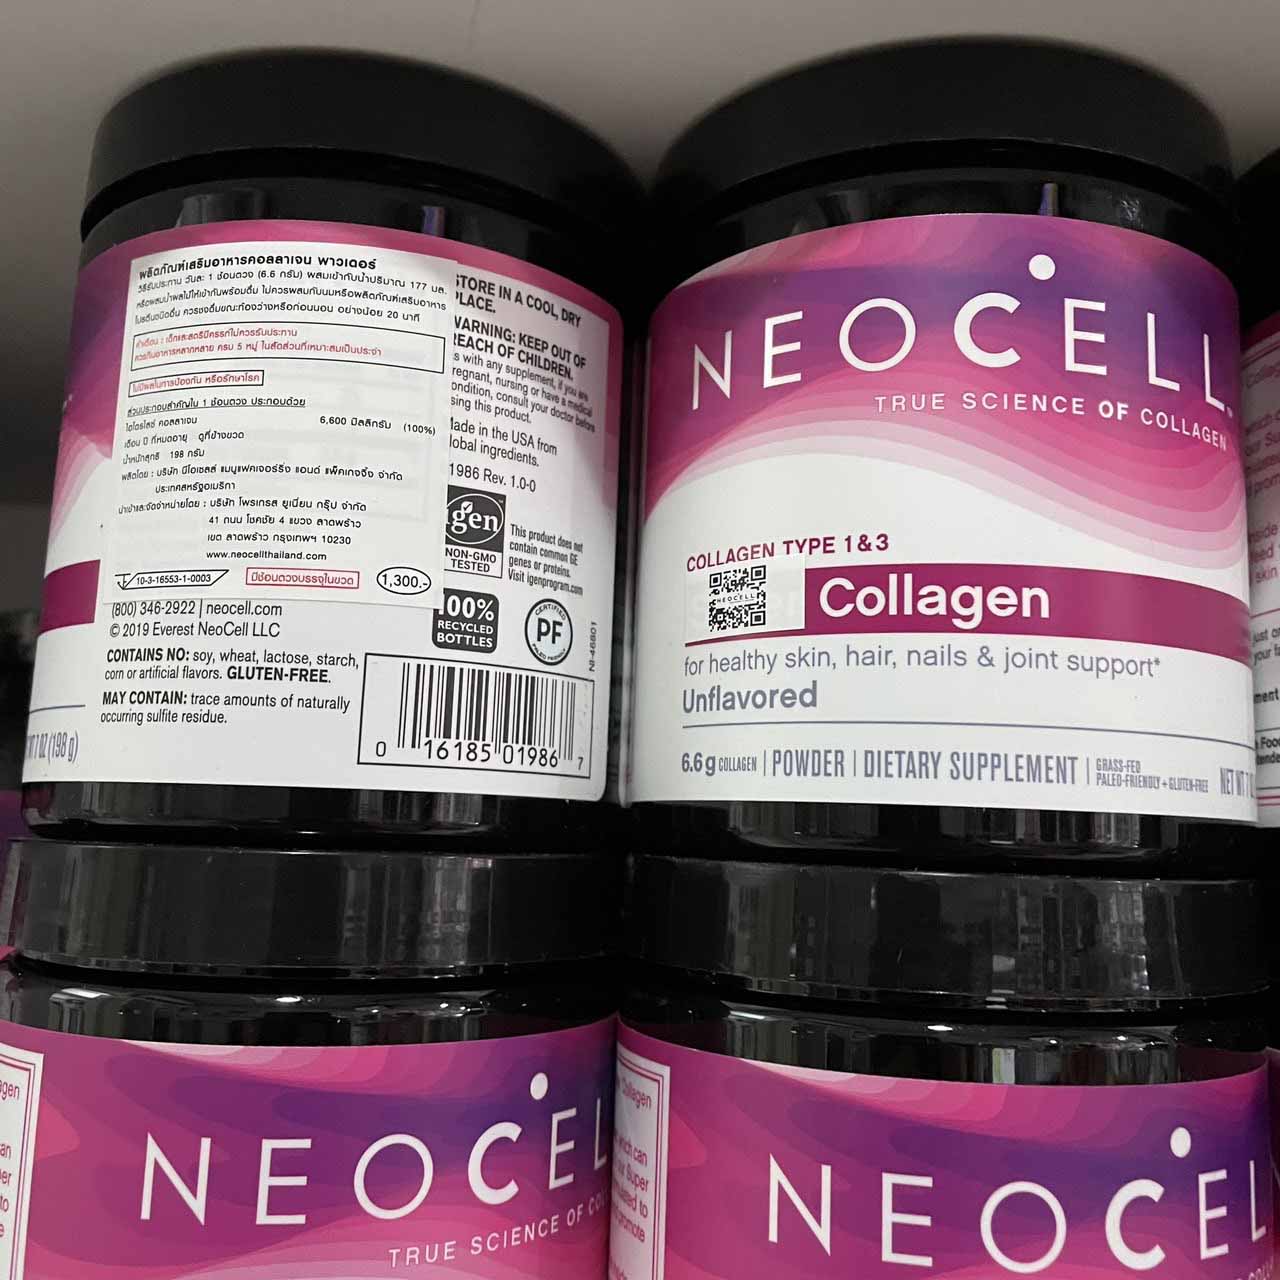 Neocell Super Collagen Type 1&3 Powder คอลลาเจน 6,600 มก.ชนิดผง ช่วยบำรุงผิวพรรณให้ตึงกระชับ เพิ่มความยืดหยุ่น ลดเลือนริ้วรอยร่องลึก ช่วยให้ผิวพรรณเปล่งปลั่งสดใสจากภายใน แลดูอ่อนวัยยิ่งขึ้น